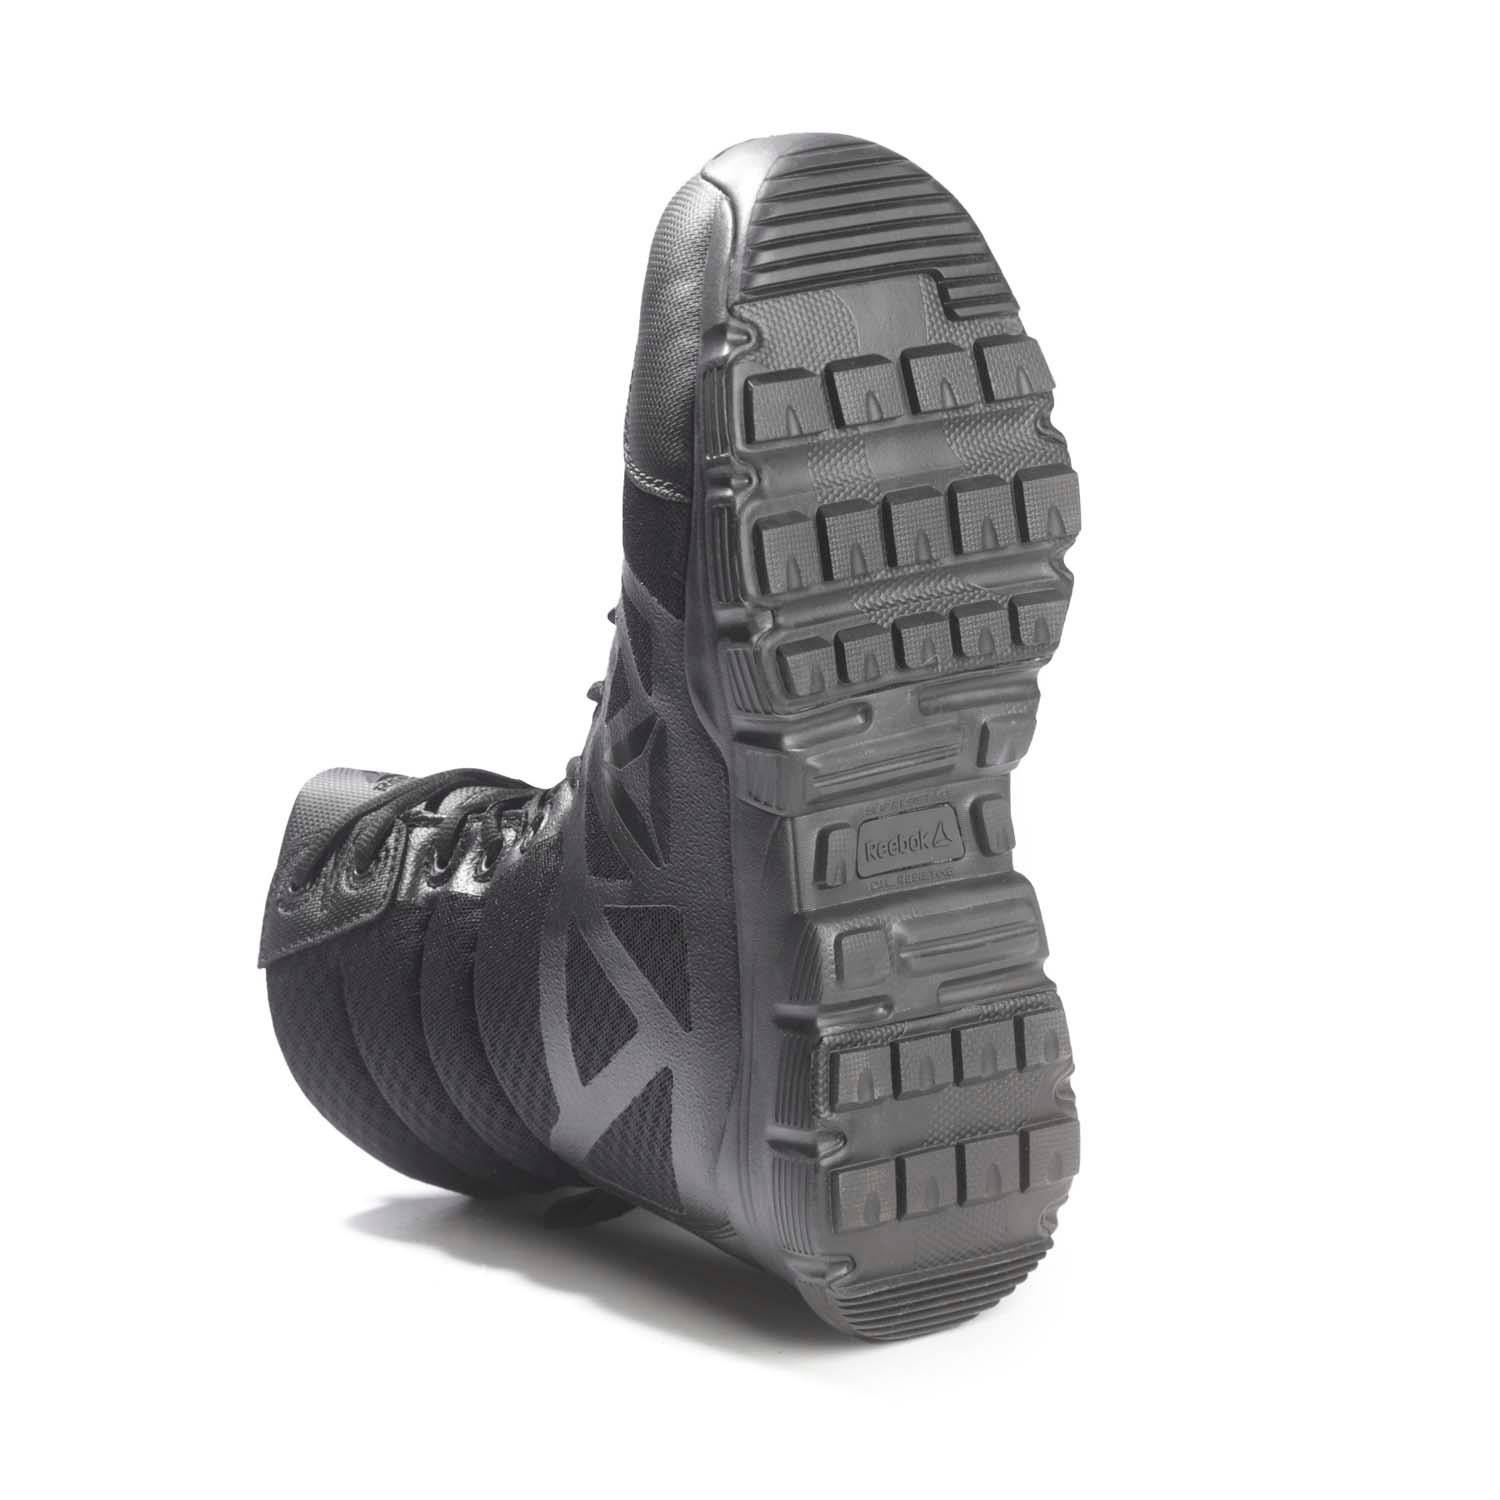 reebok 8 dauntless ultra light side zip duty boots